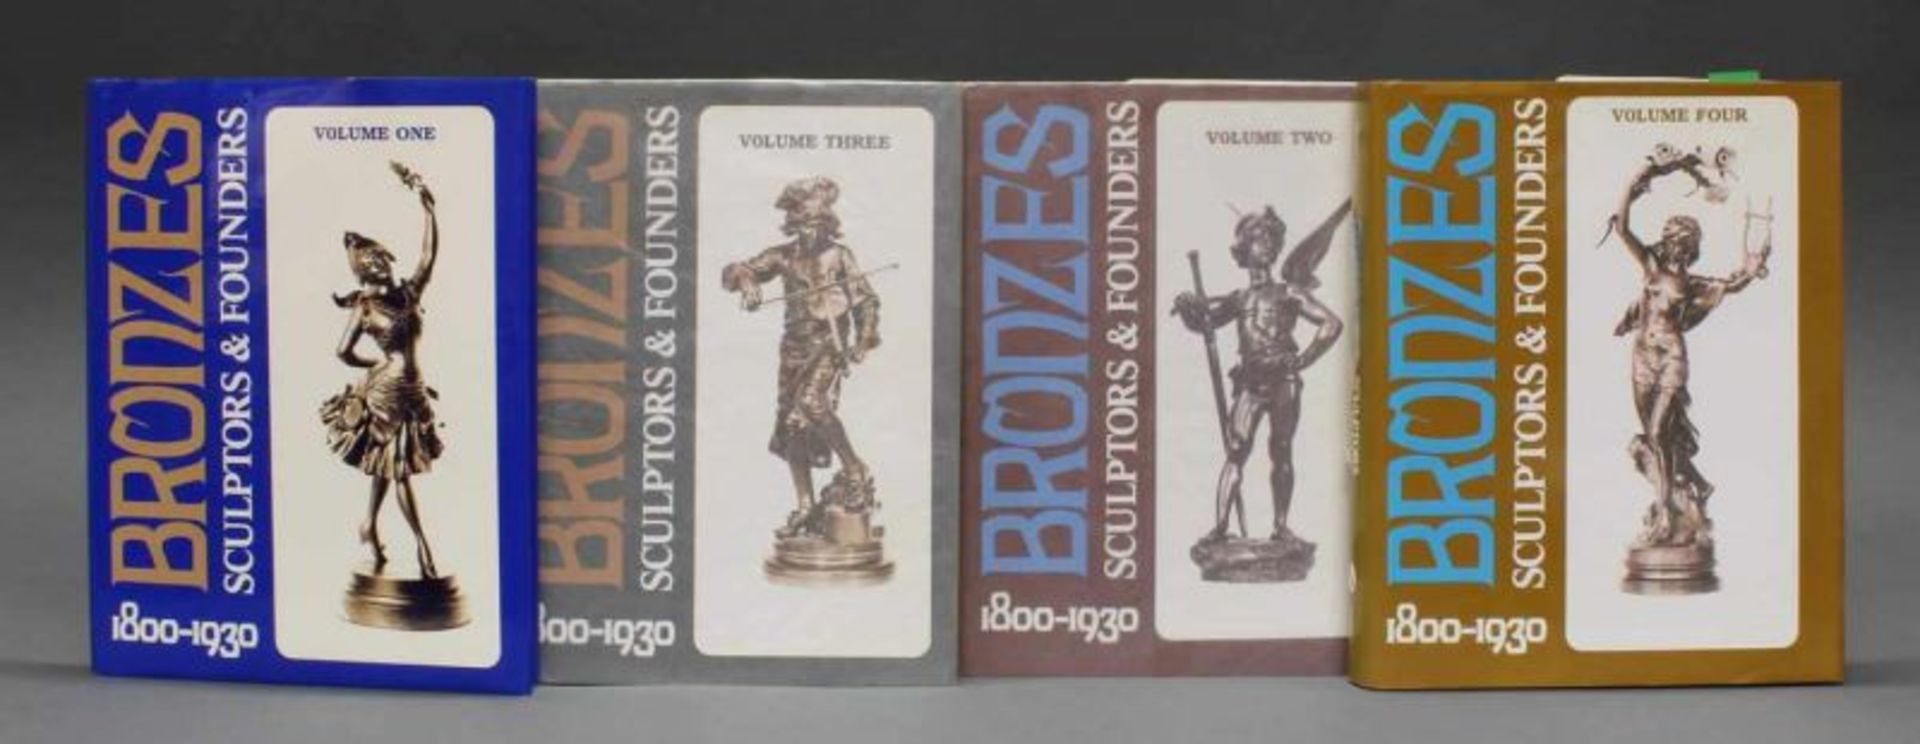 4 Bände, Harold Berman, "Bronzes Sculptors & Founders 1800-1930", Vol. 1-4, Schiffer Publishing